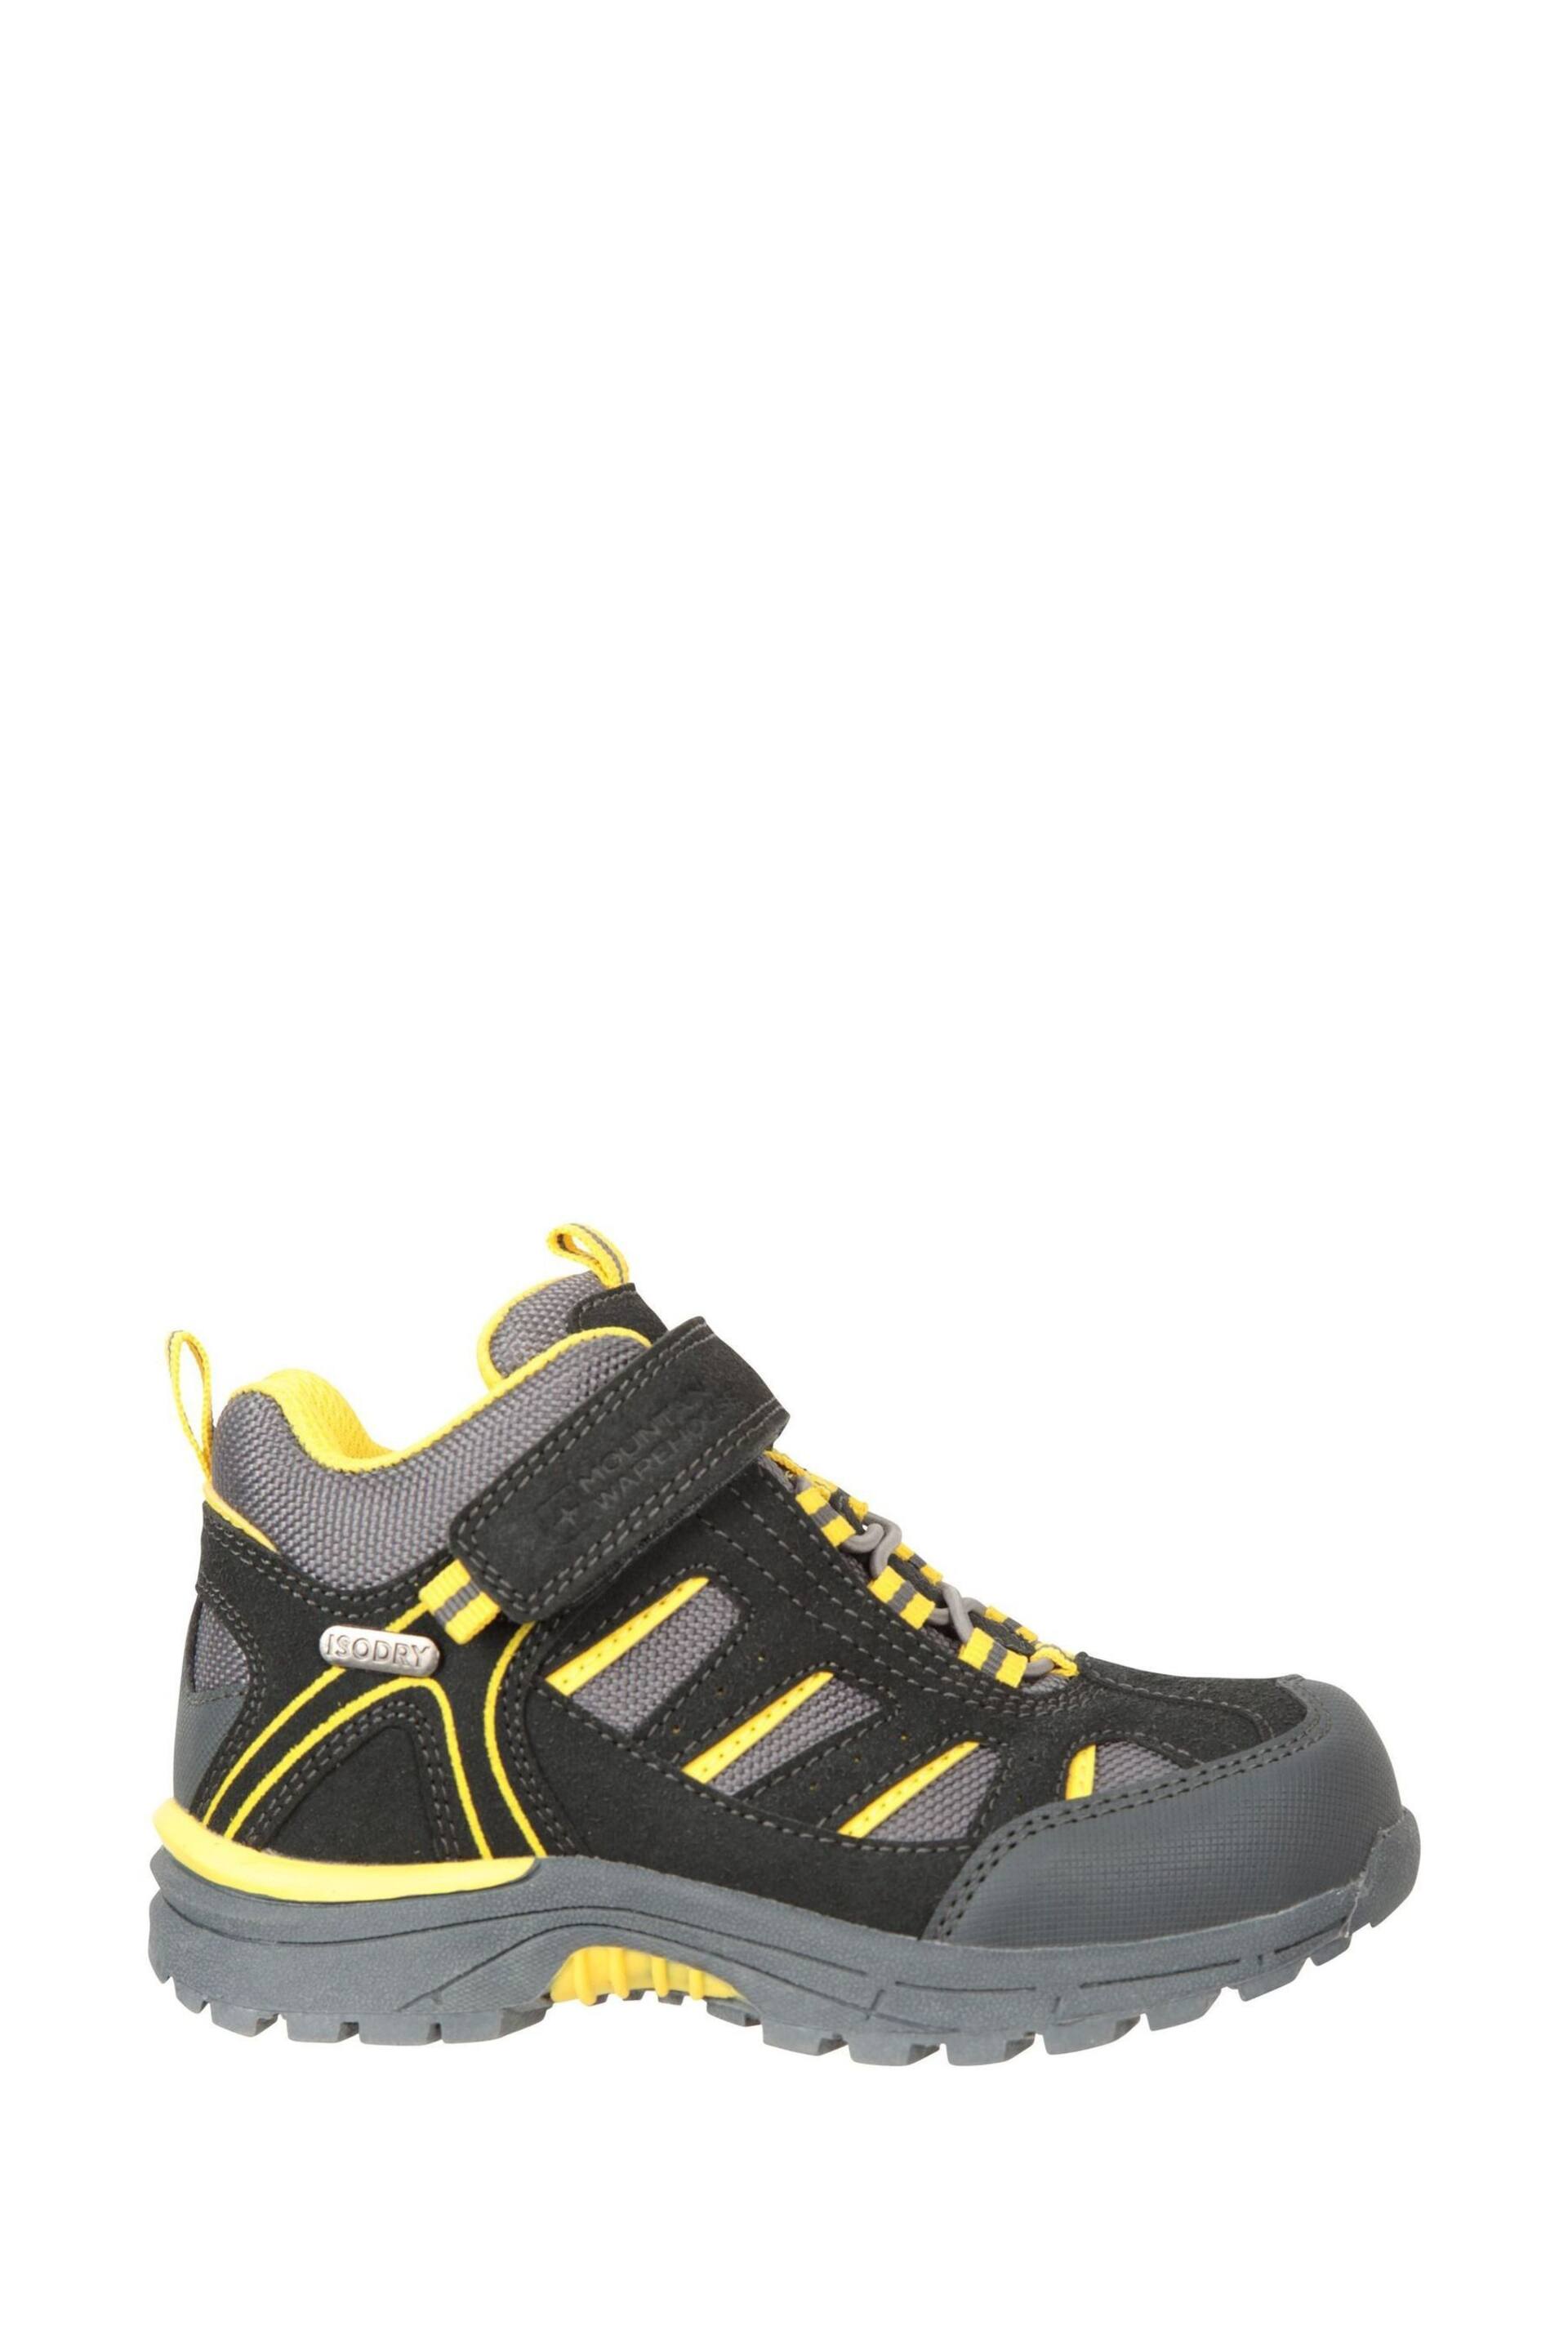 Mountain Warehouse Black Junior Drift Waterproof Walking Boots - Image 2 of 5